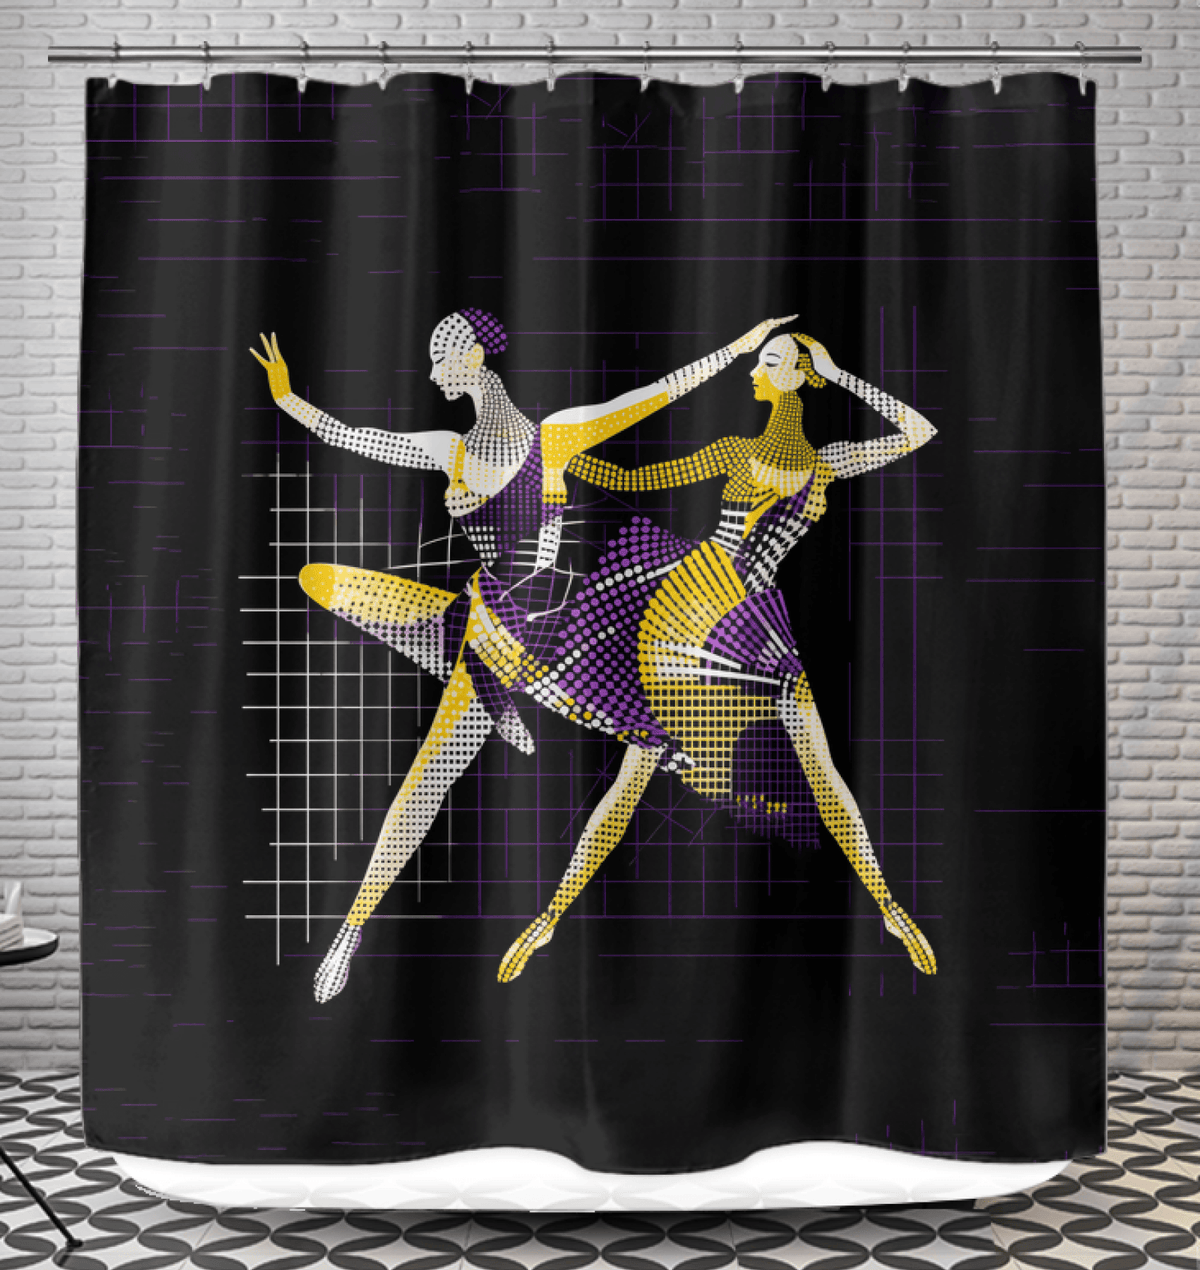 Elegant shower curtain featuring a feminine dance form design, ideal for modern bathrooms.